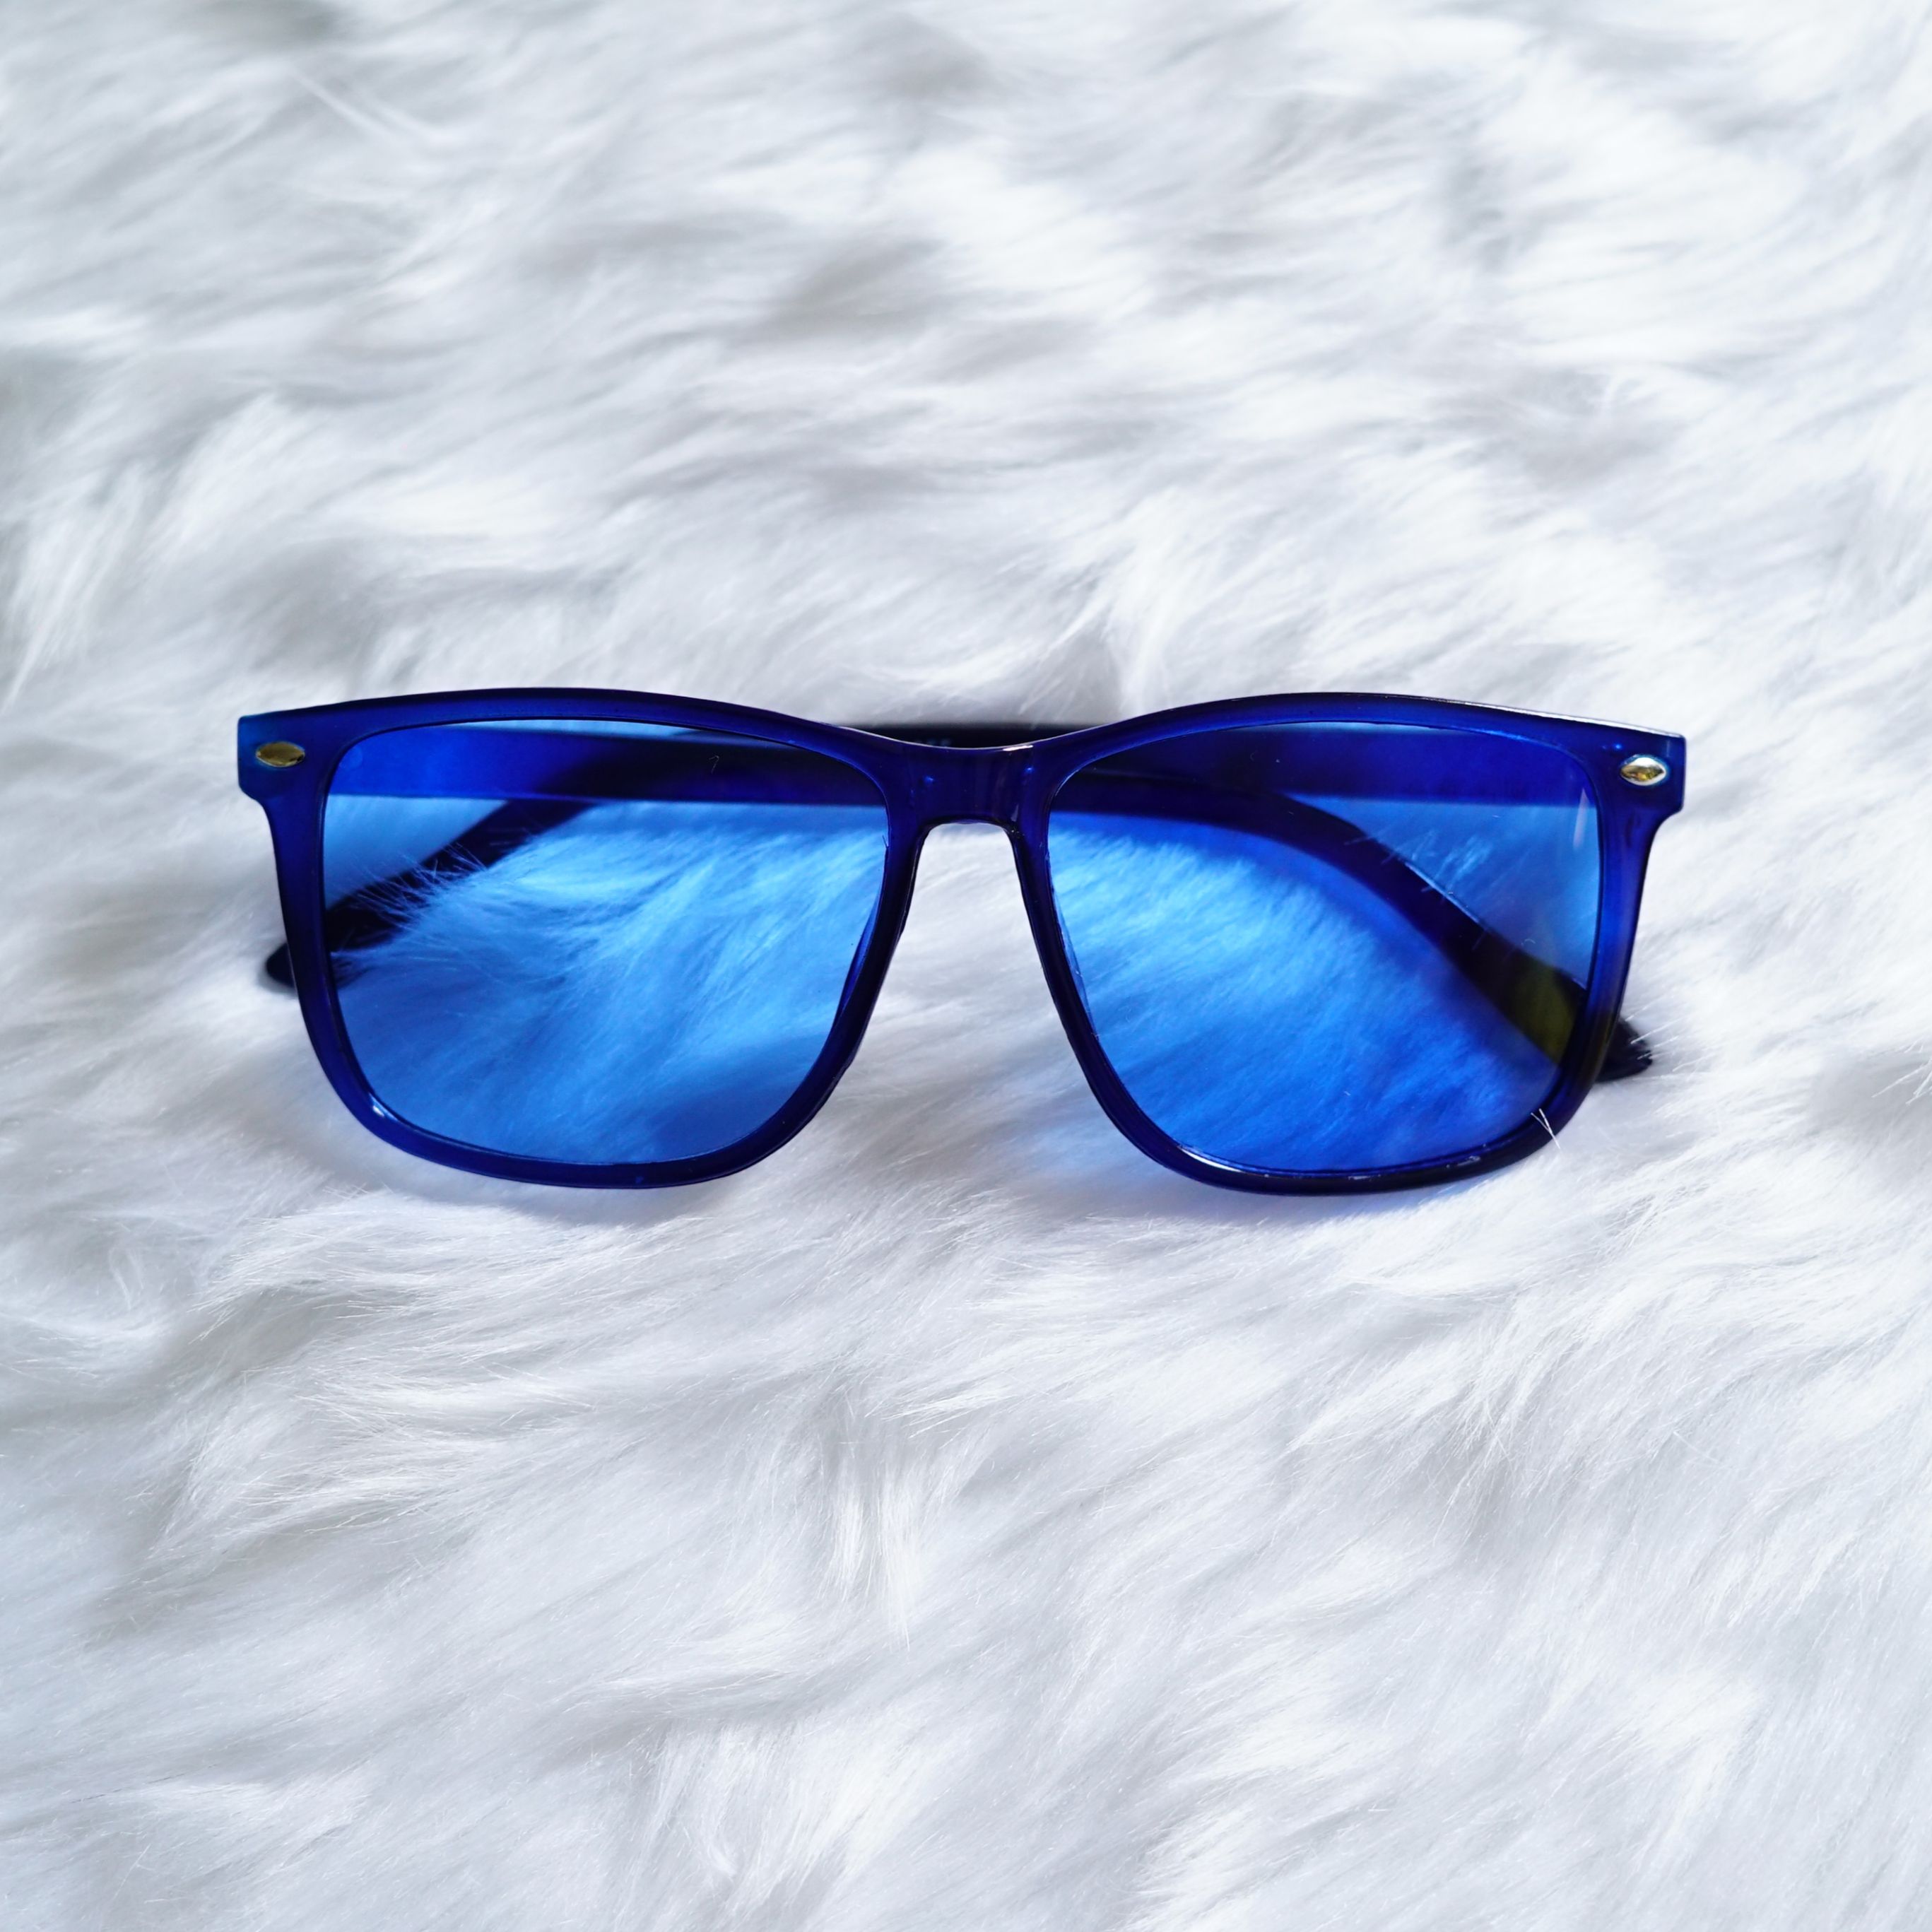 Skinny ice blue mirror lens | Zon Optics Sunglasses, from Switzerland with  love